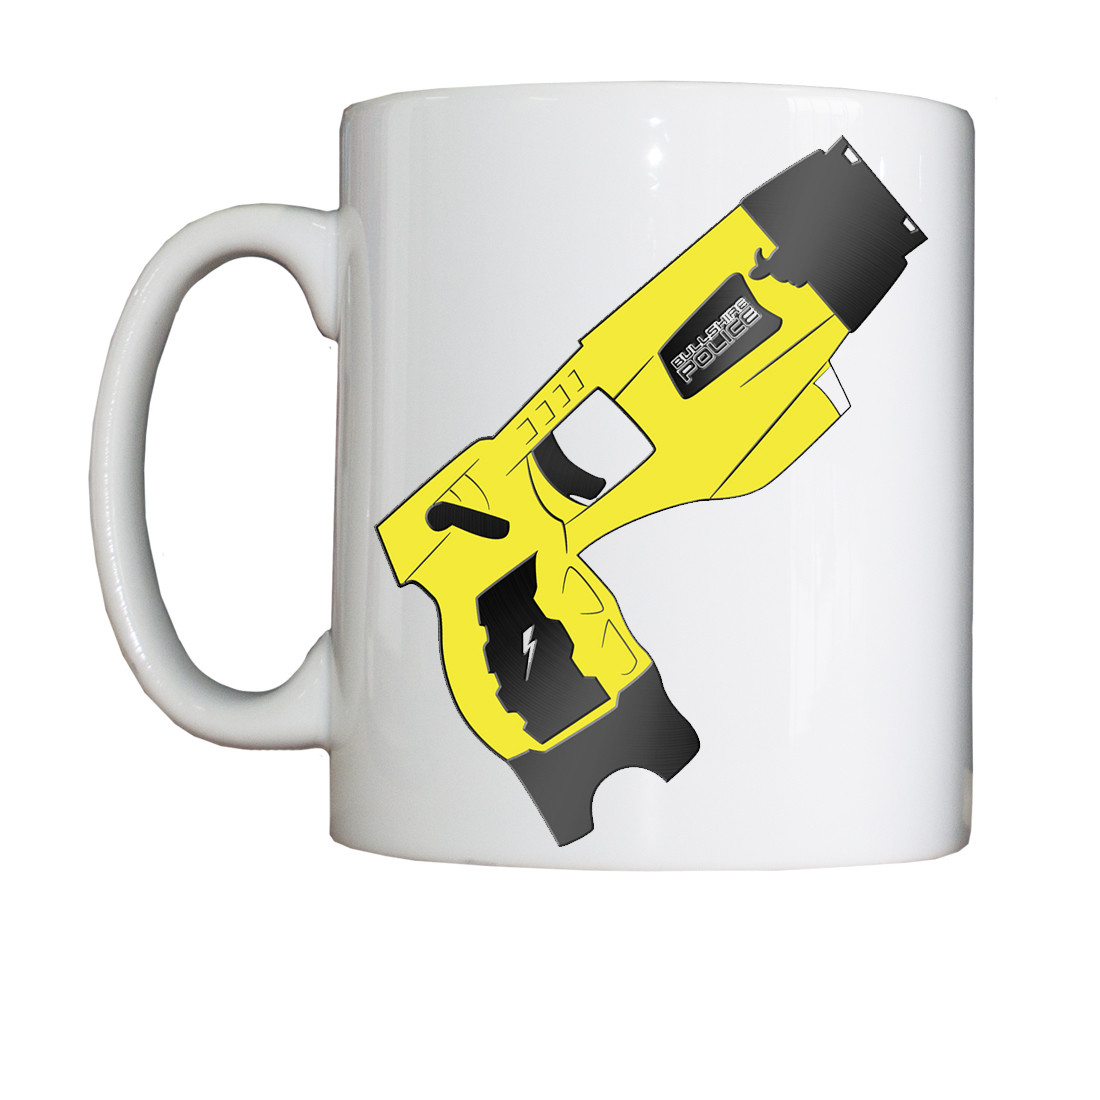 Personalised 'Bzzz' Drinking Vessel (Mug)